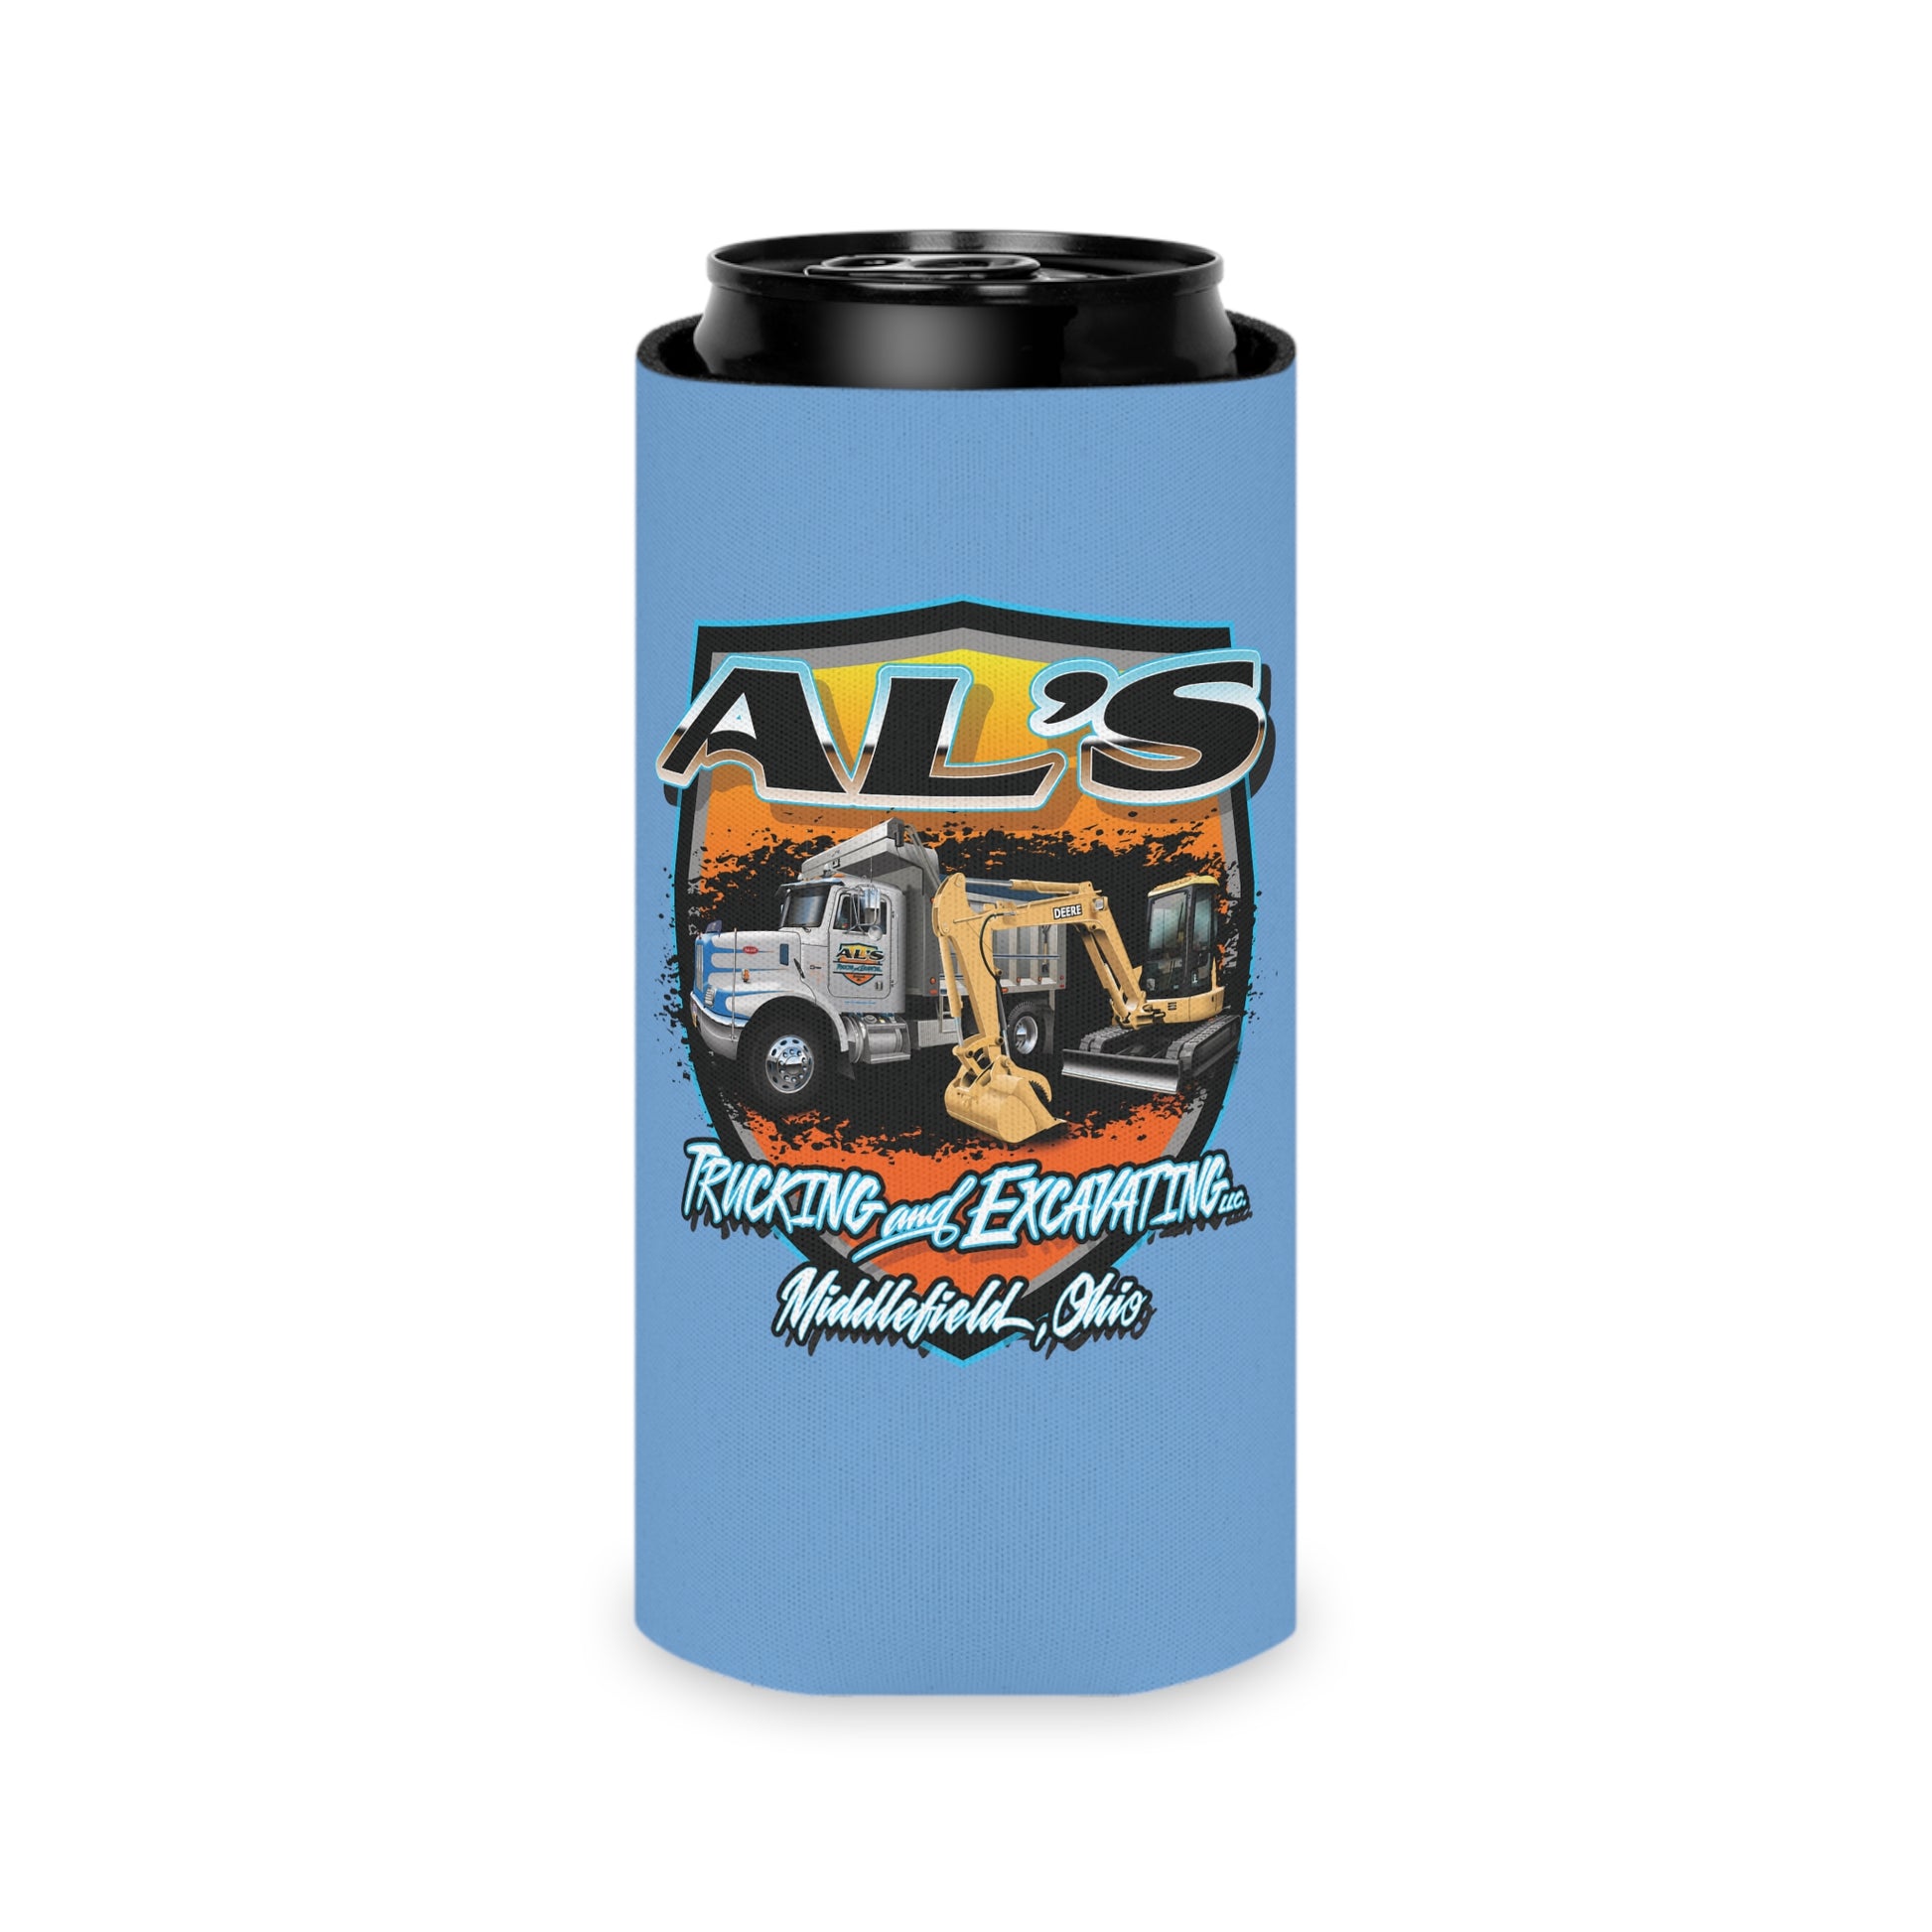 Al's Trucking and Excavating - Can Coolers - Regular / Slim - OCDandApparel